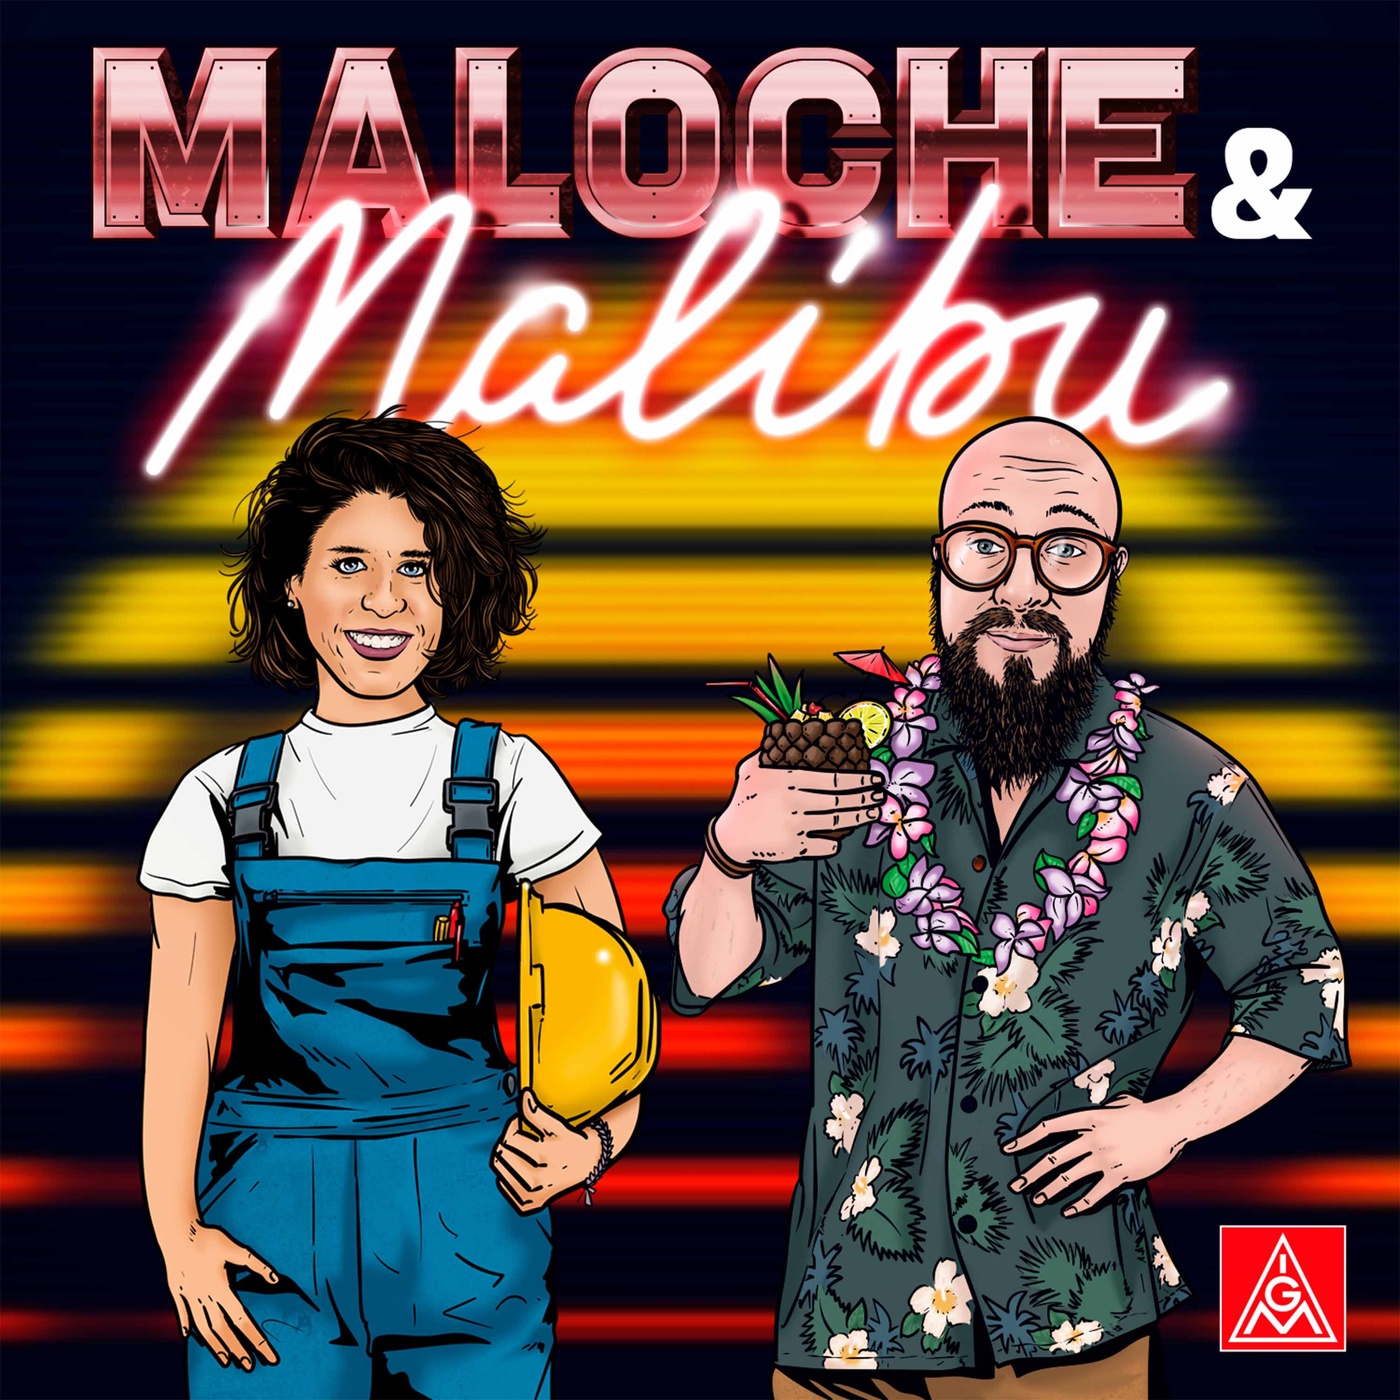 Maloche und Malibu